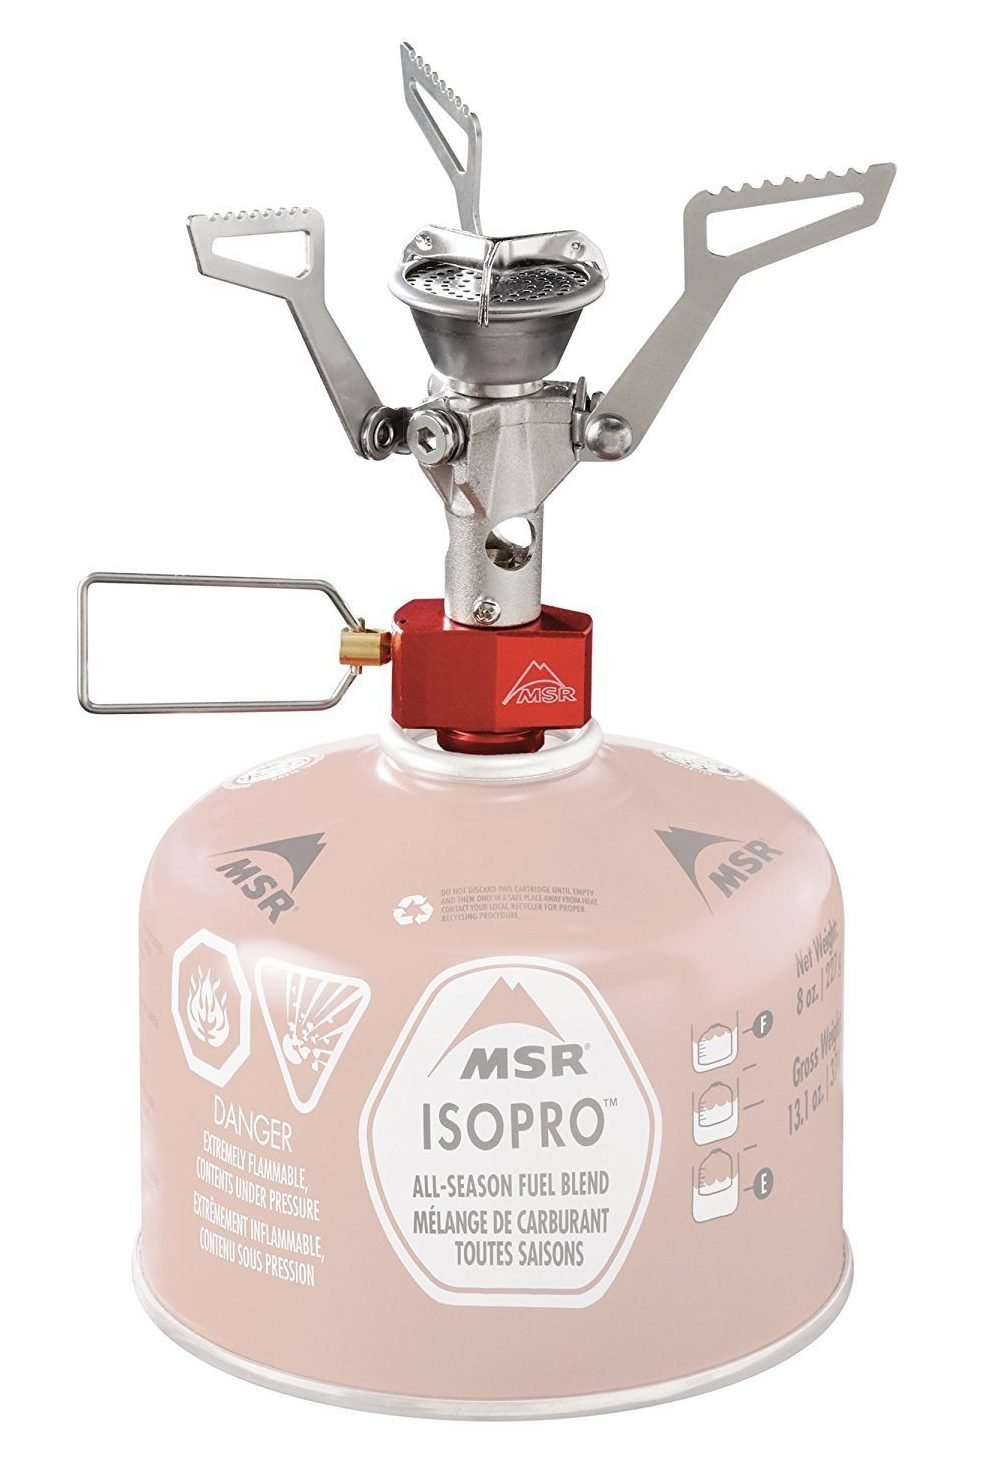 MSR Isopro backpacking stove